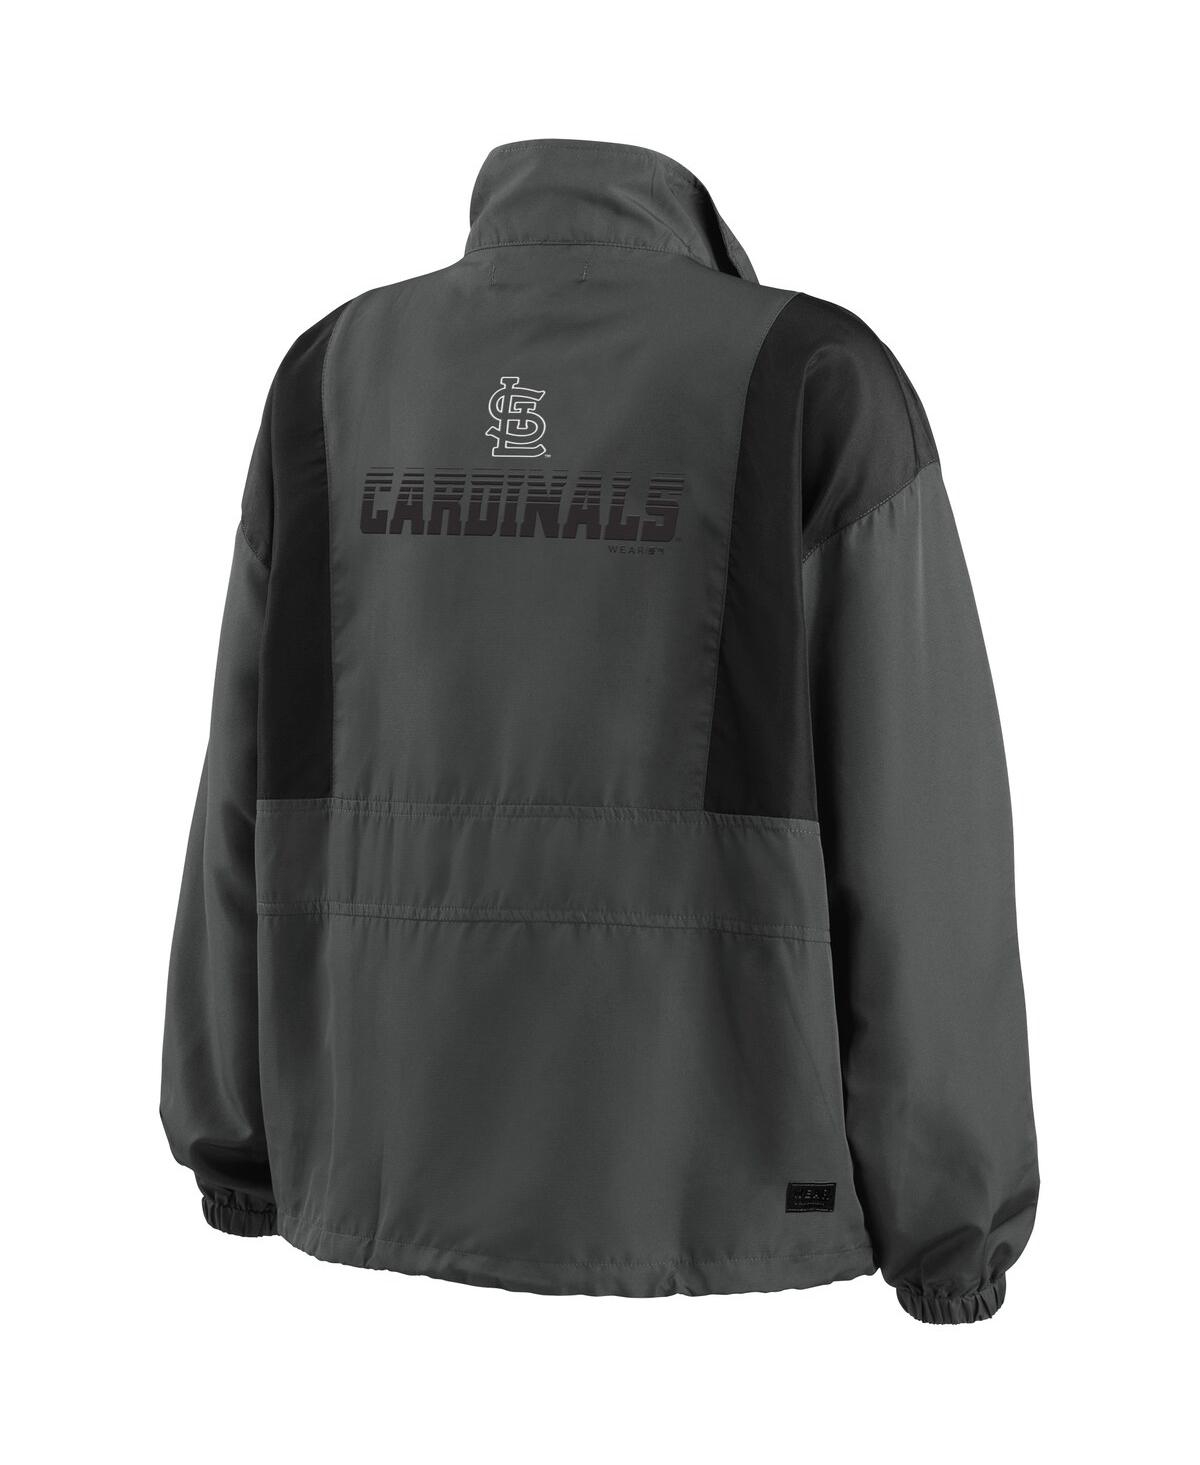 Shop Wear By Erin Andrews Women's  Charcoal St. Louis Cardinals Packable Half-zip Jacket